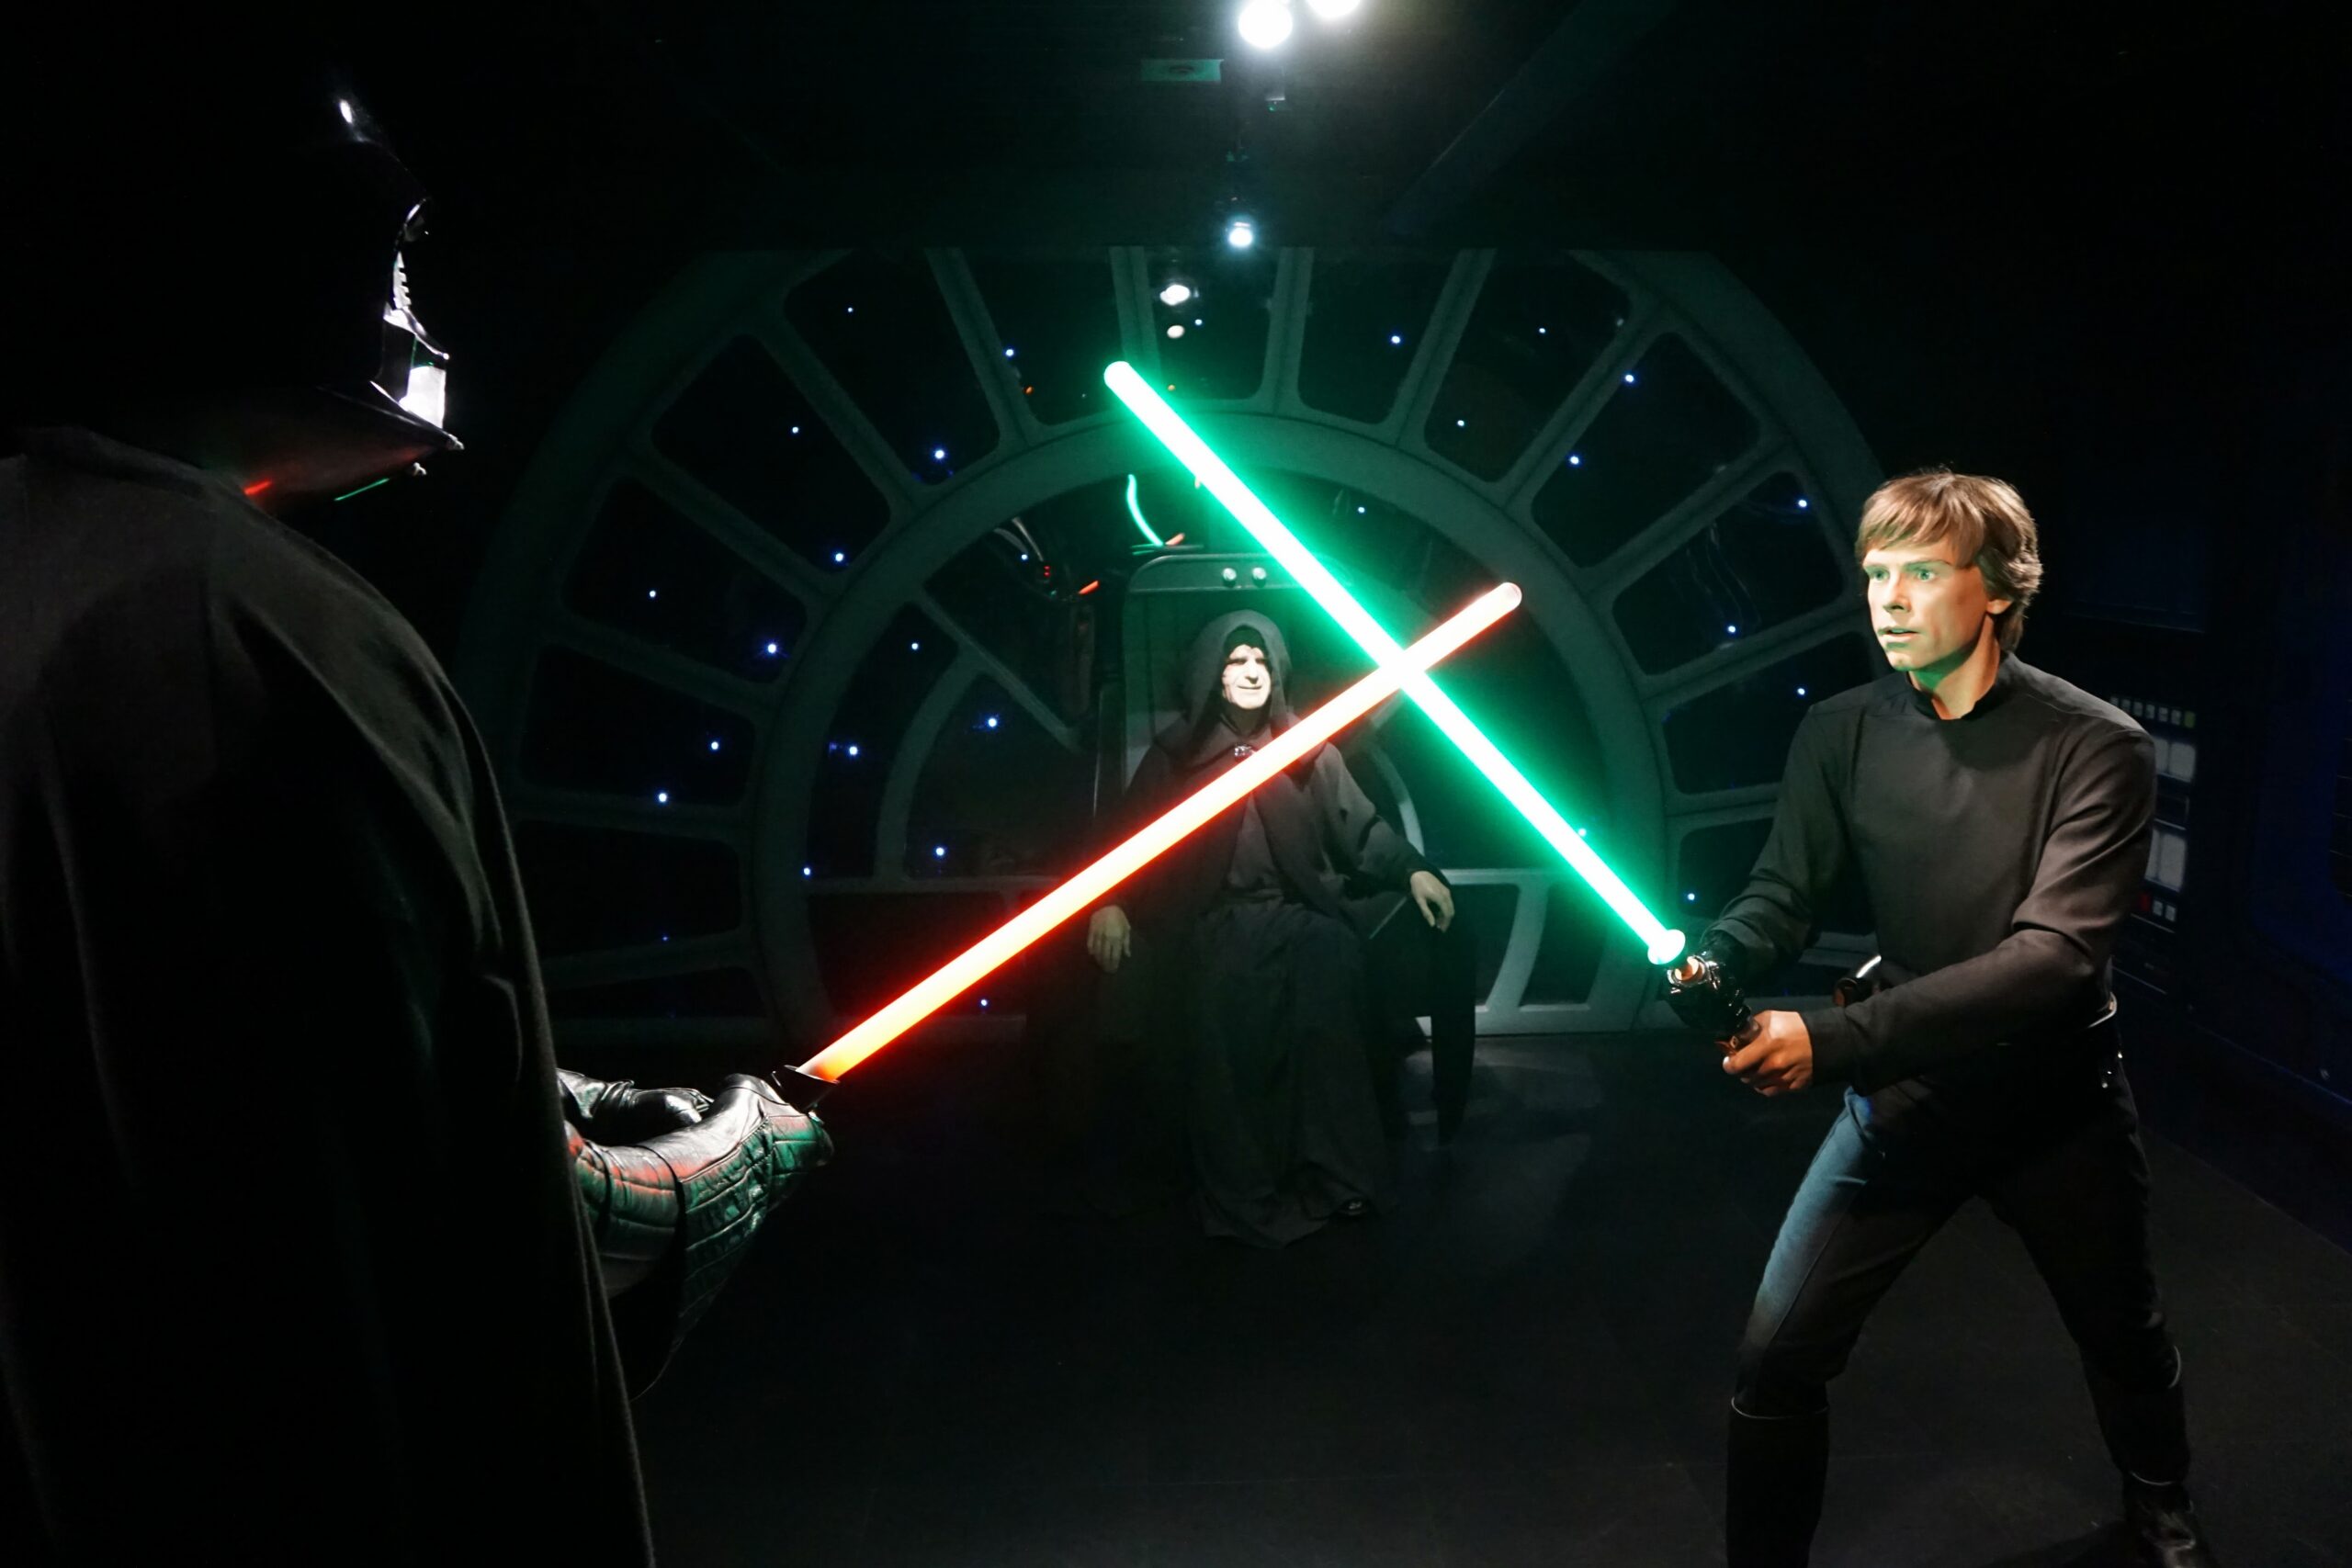 Darth Vader e Luke Skywalker no museu Madame Tussauds. Imagem ilustrativa texto plot twist.